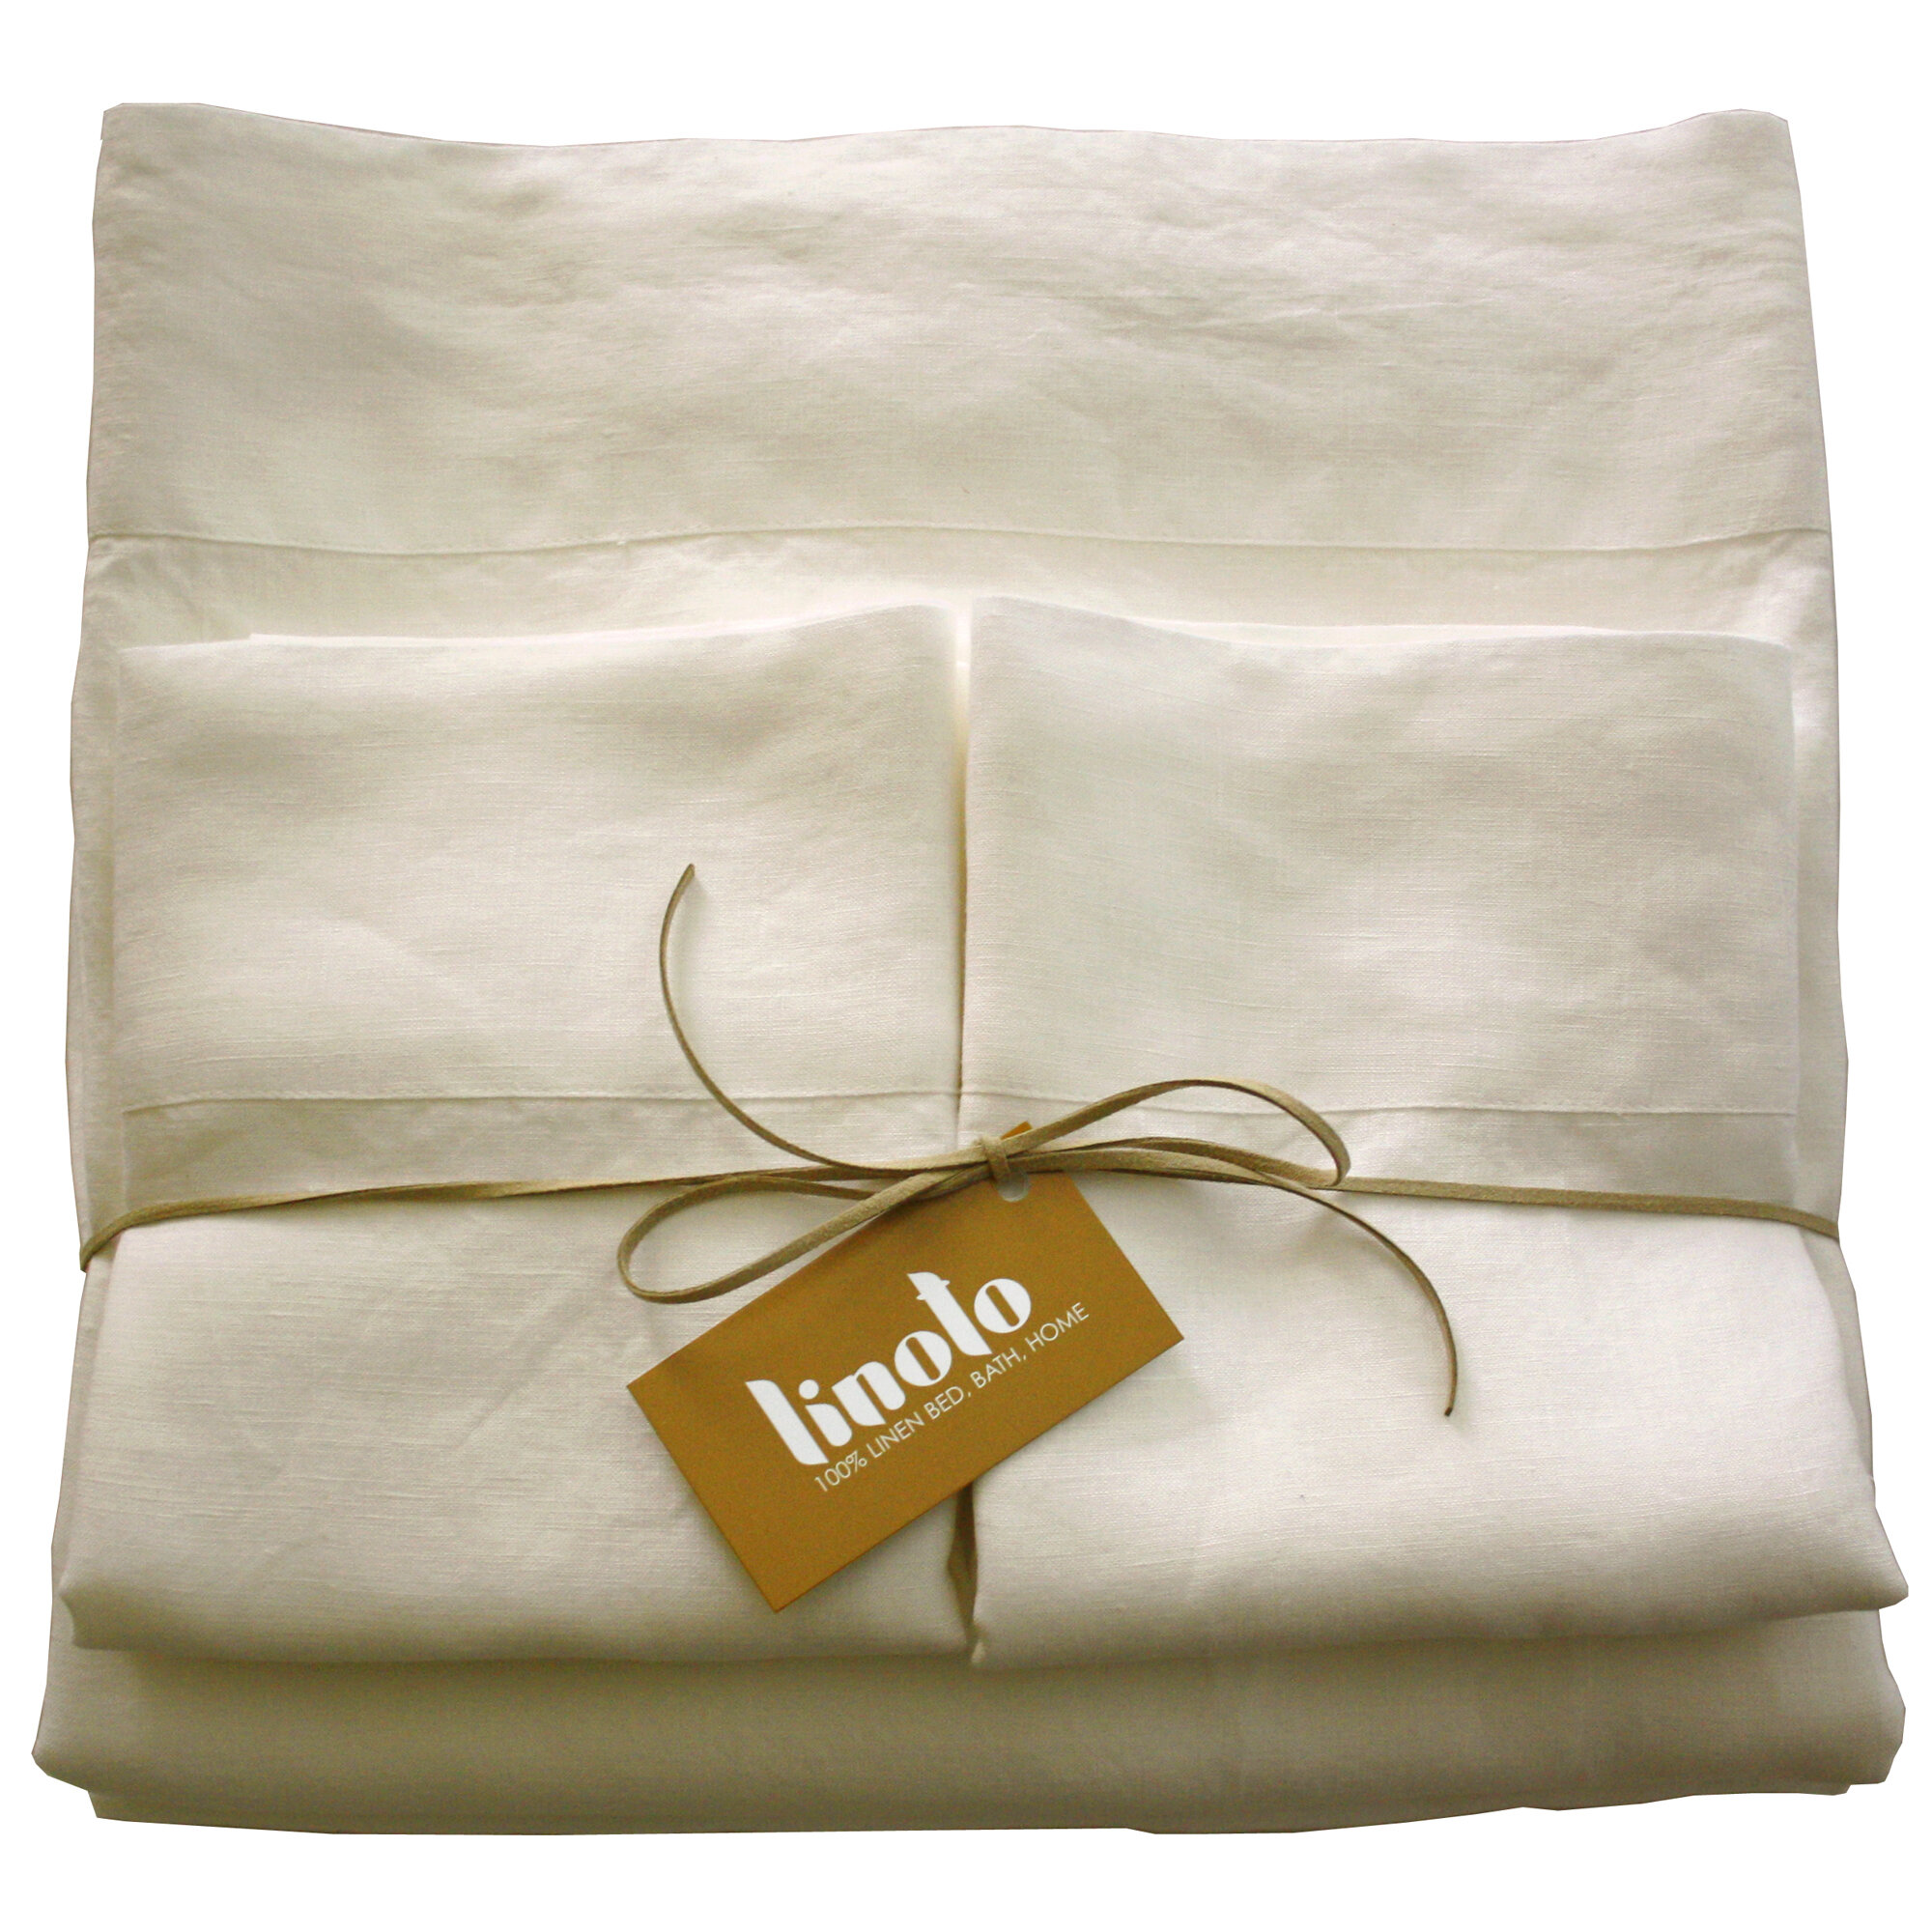 Linoto Linen Solid Colour Sheet Set & Reviews - Wayfair Canada